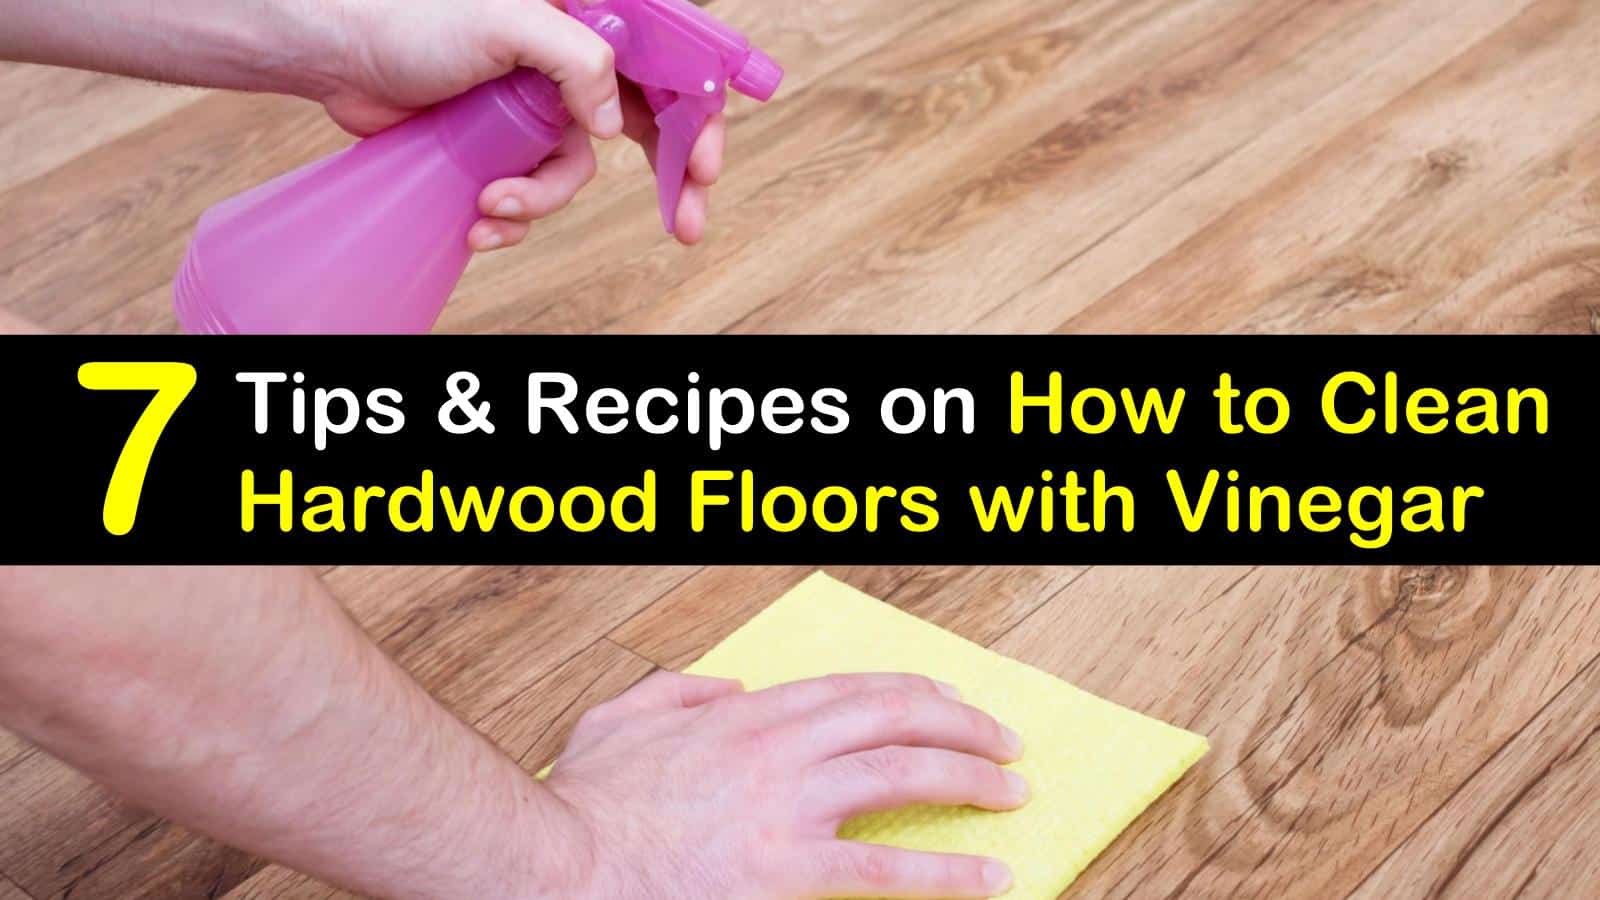 Clean Hardwood Floors With Vinegar, What Should I Clean My Hardwood Floors With